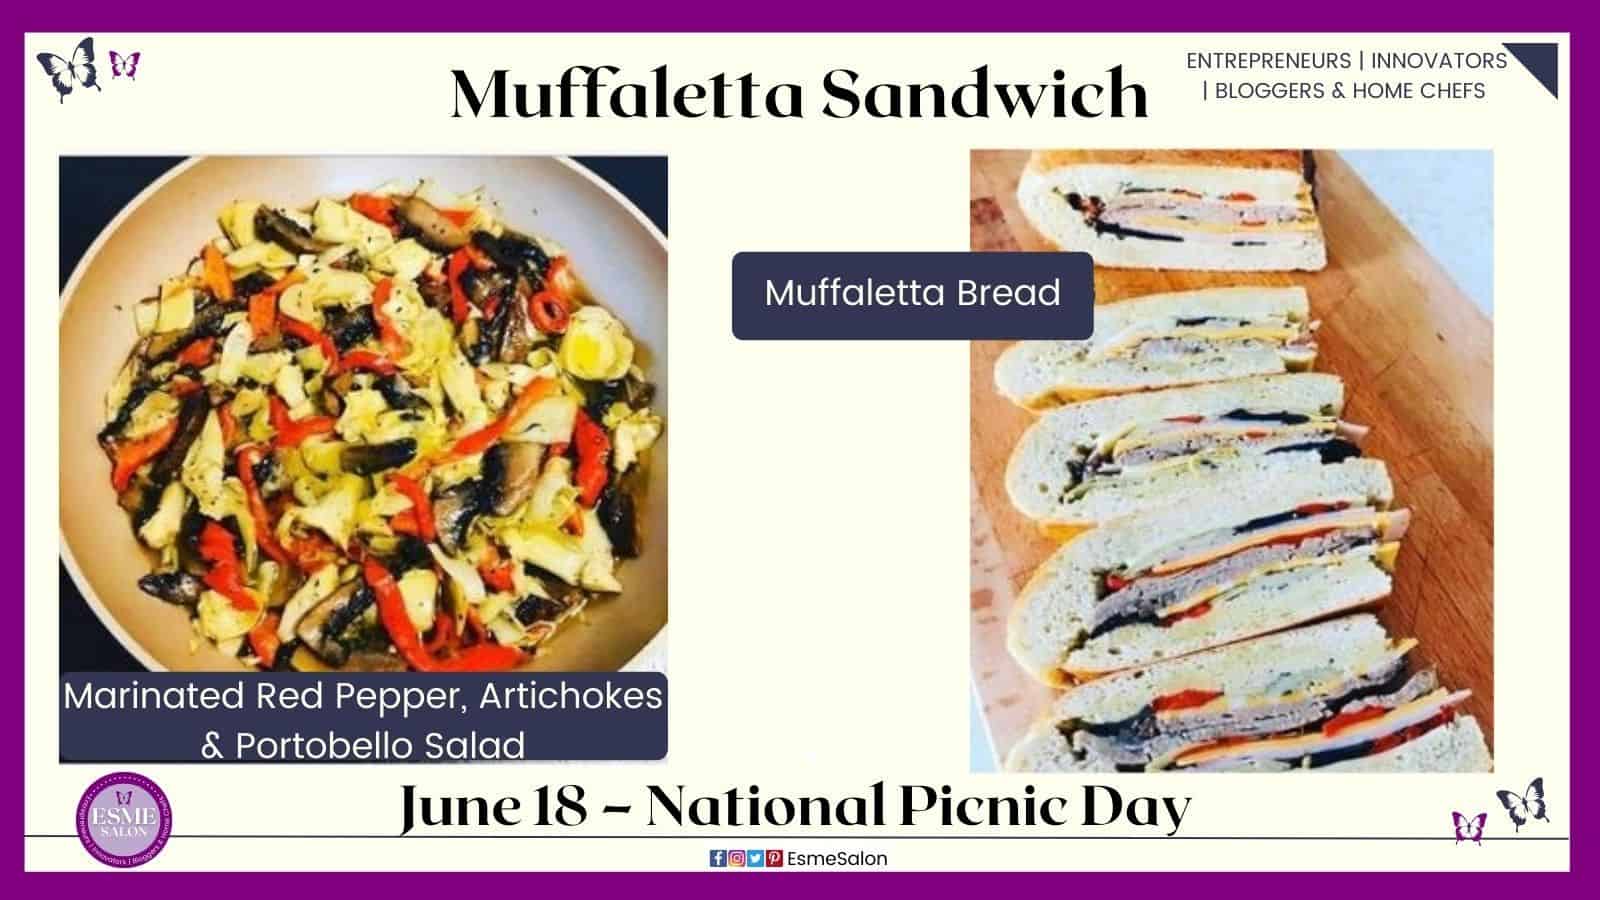 an image of Marinated Red Pepper, Artichokes & Portobello Salad on a Muffaletta Sandwich